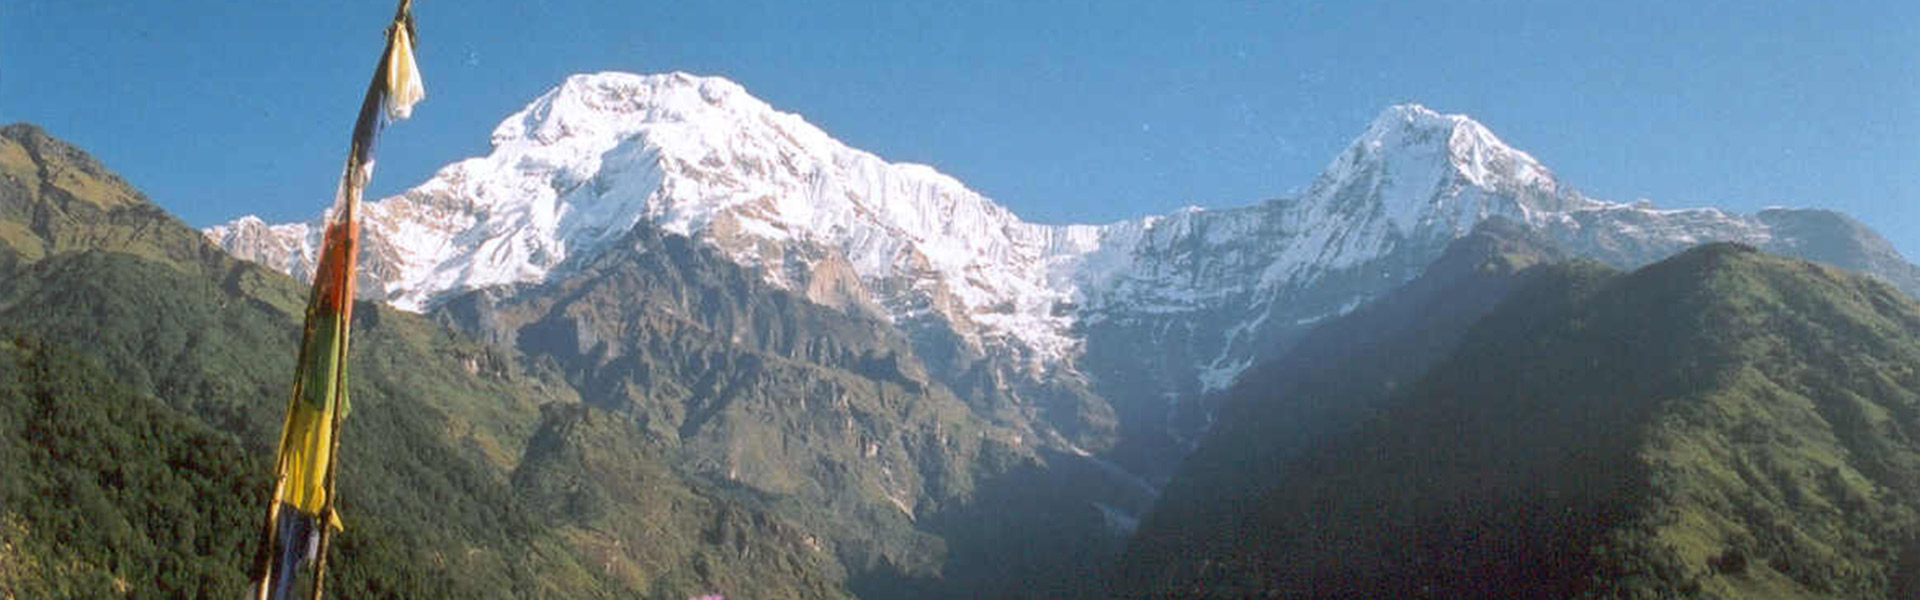 Annapurna Sanctuary Heli Trek